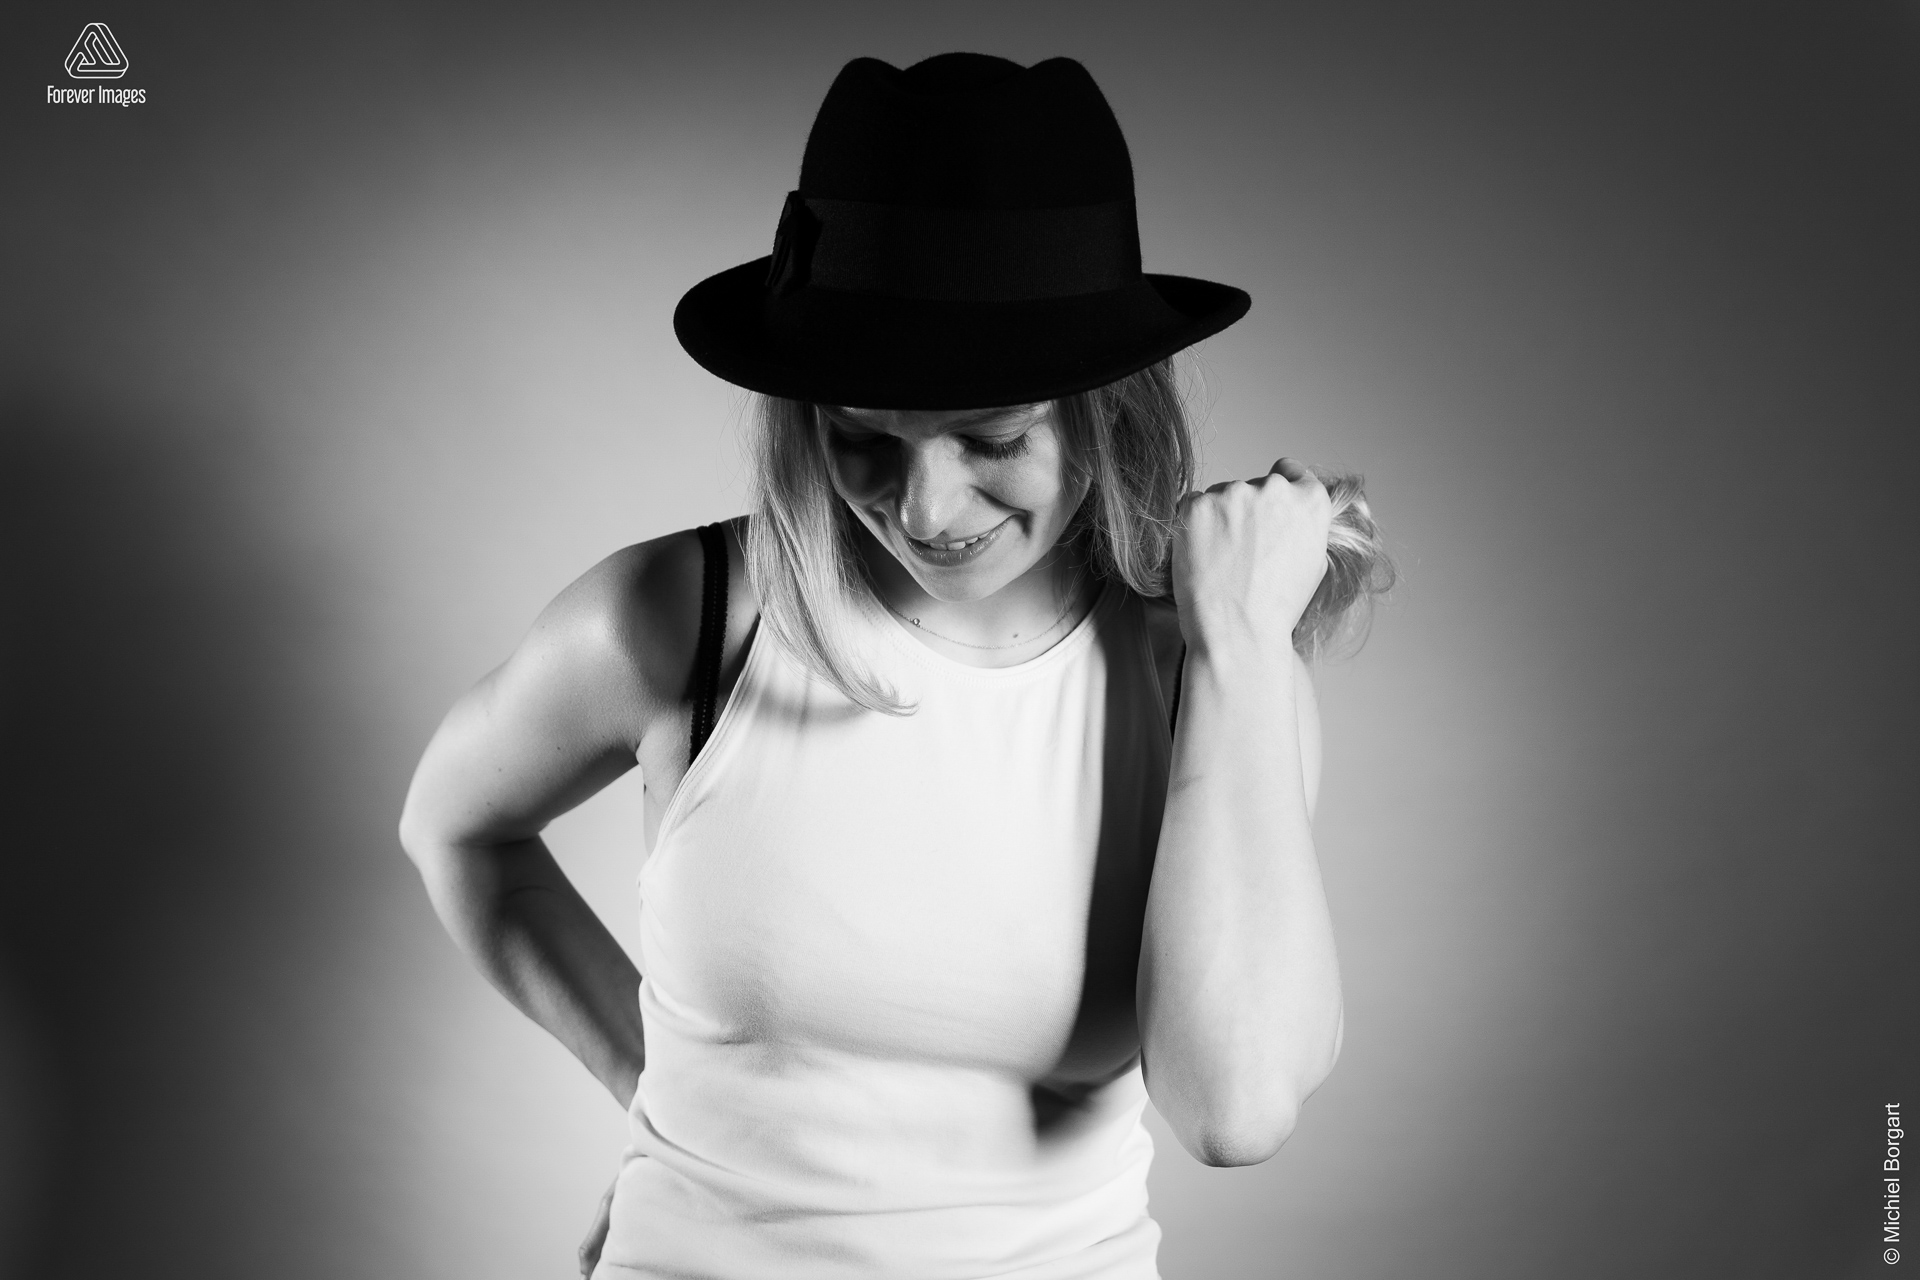 Portrait photo black and white B&W young lady white shirt black hat hand through her | Fanziska | Portrait Photographer Michiel Borgart - Forever Images.